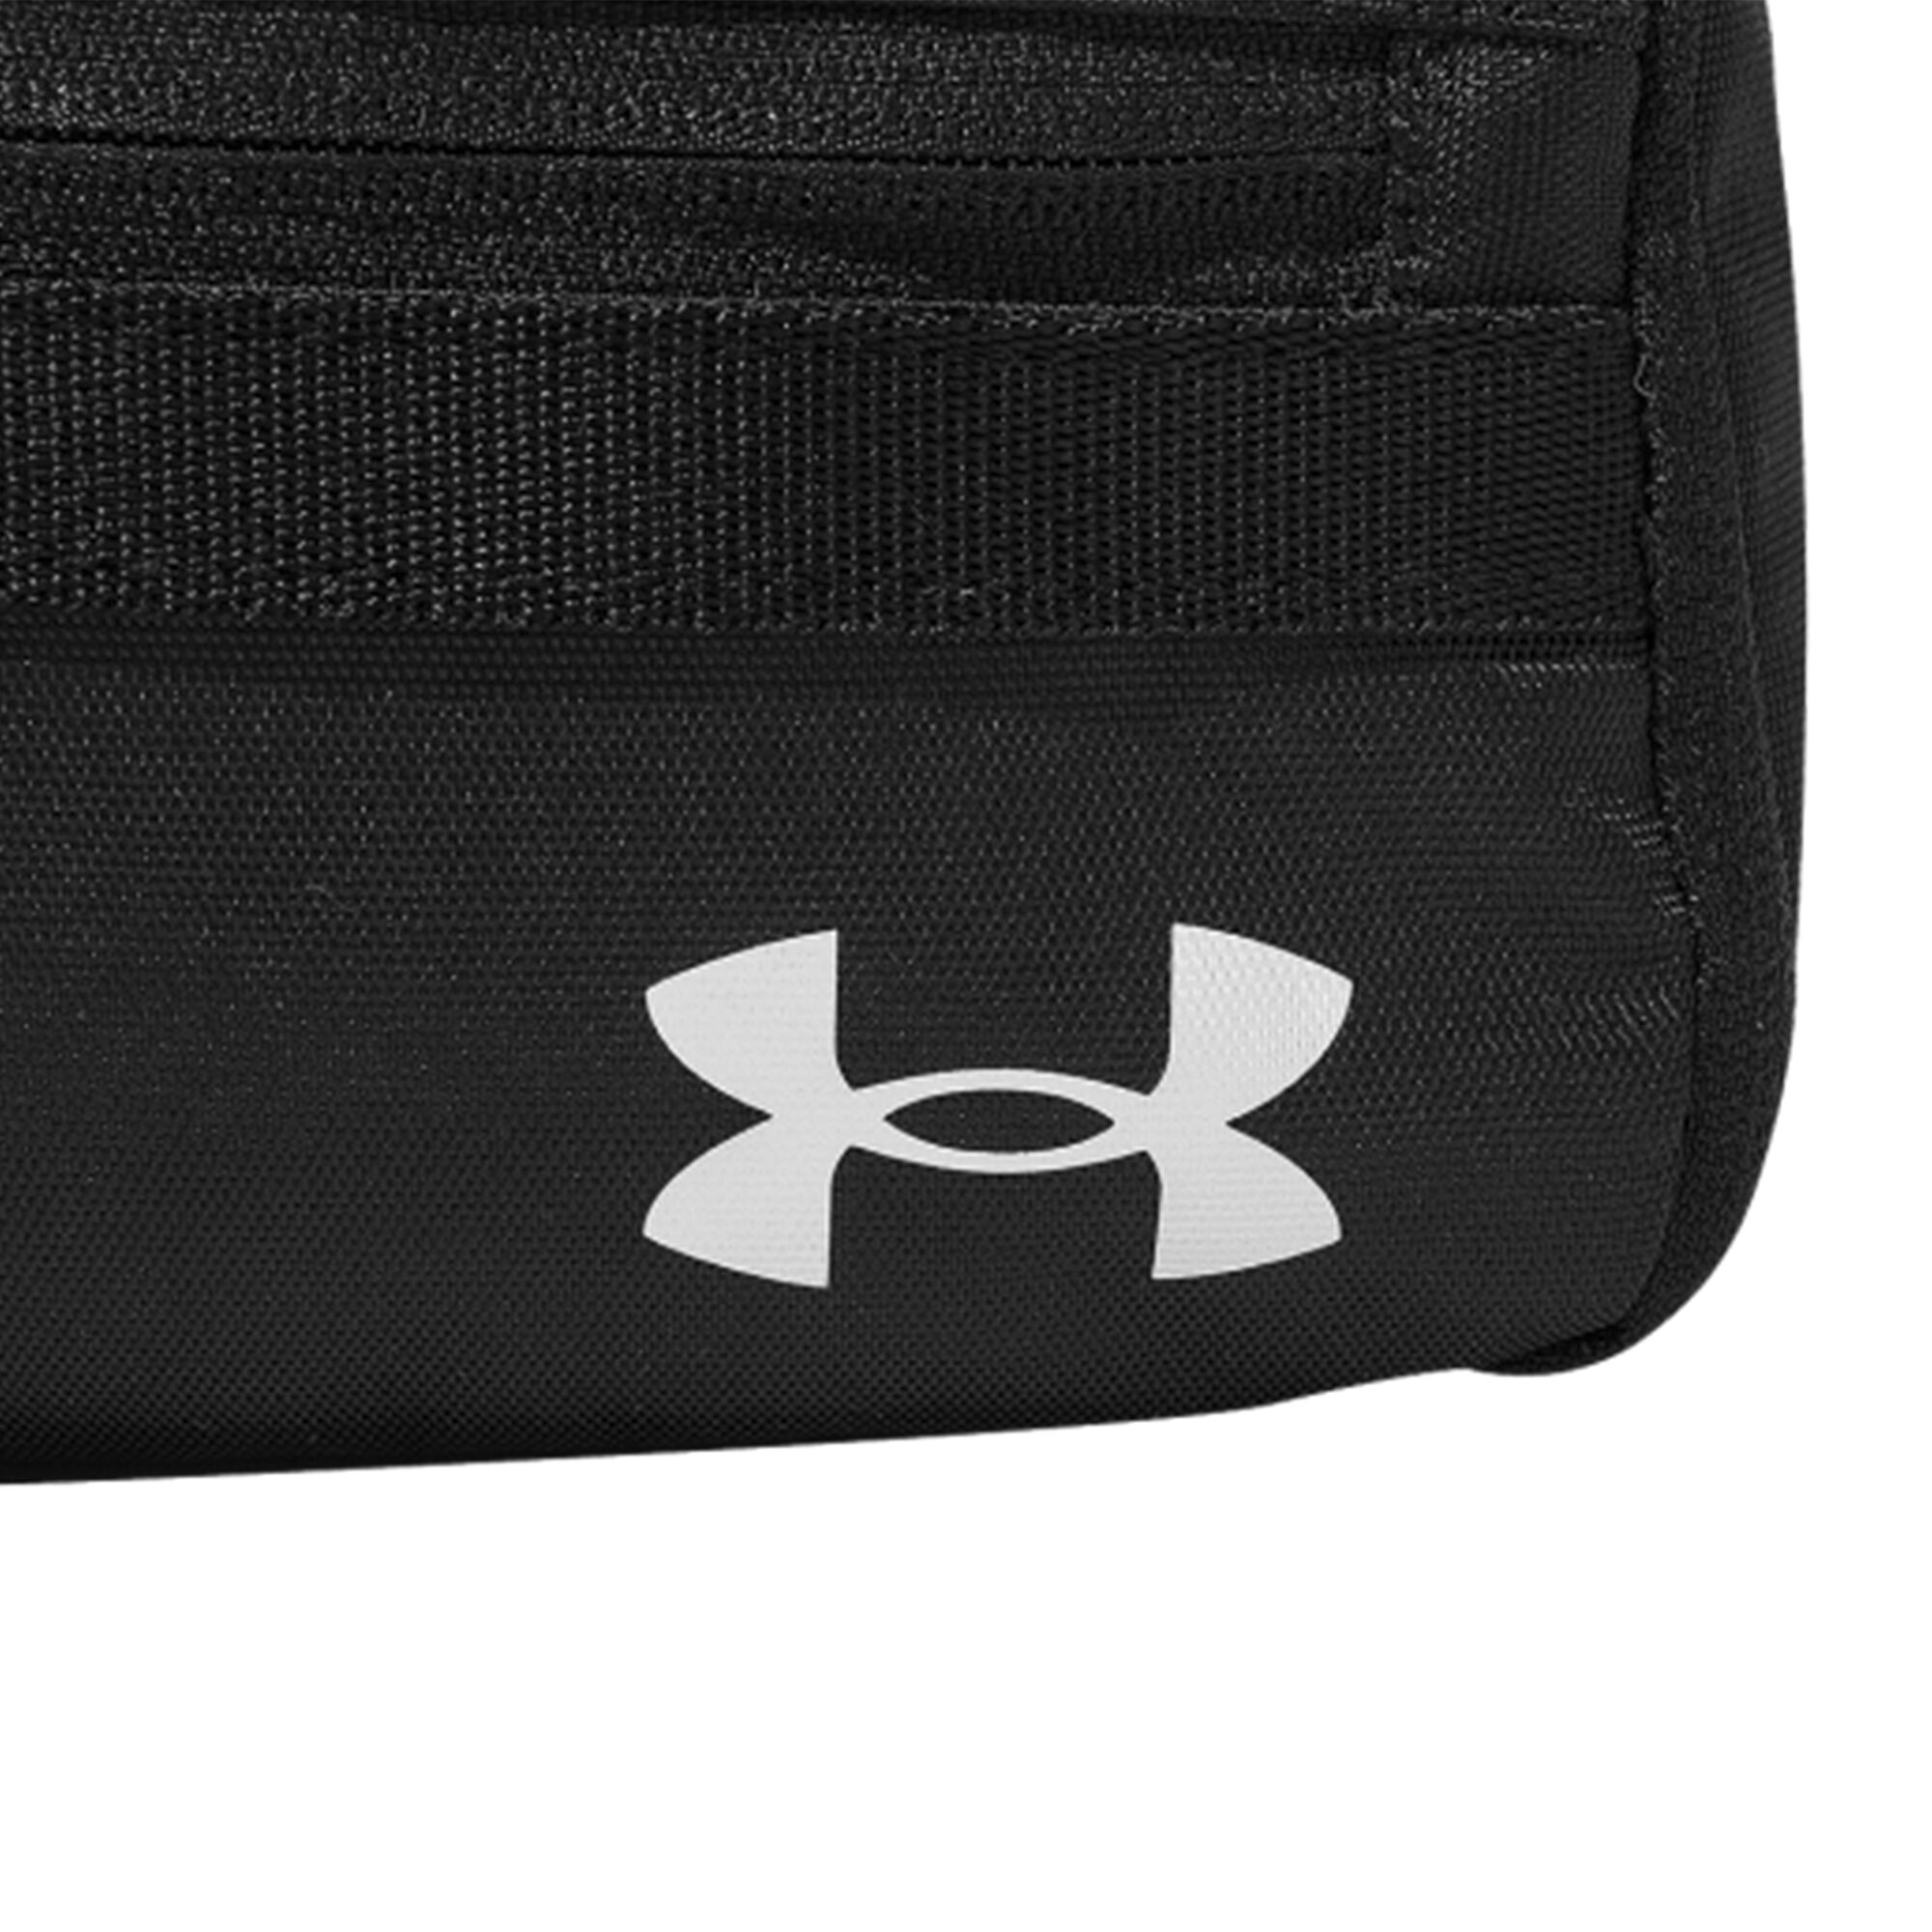 Travel bag Under Armor Contain Travel Kit Black Unisex